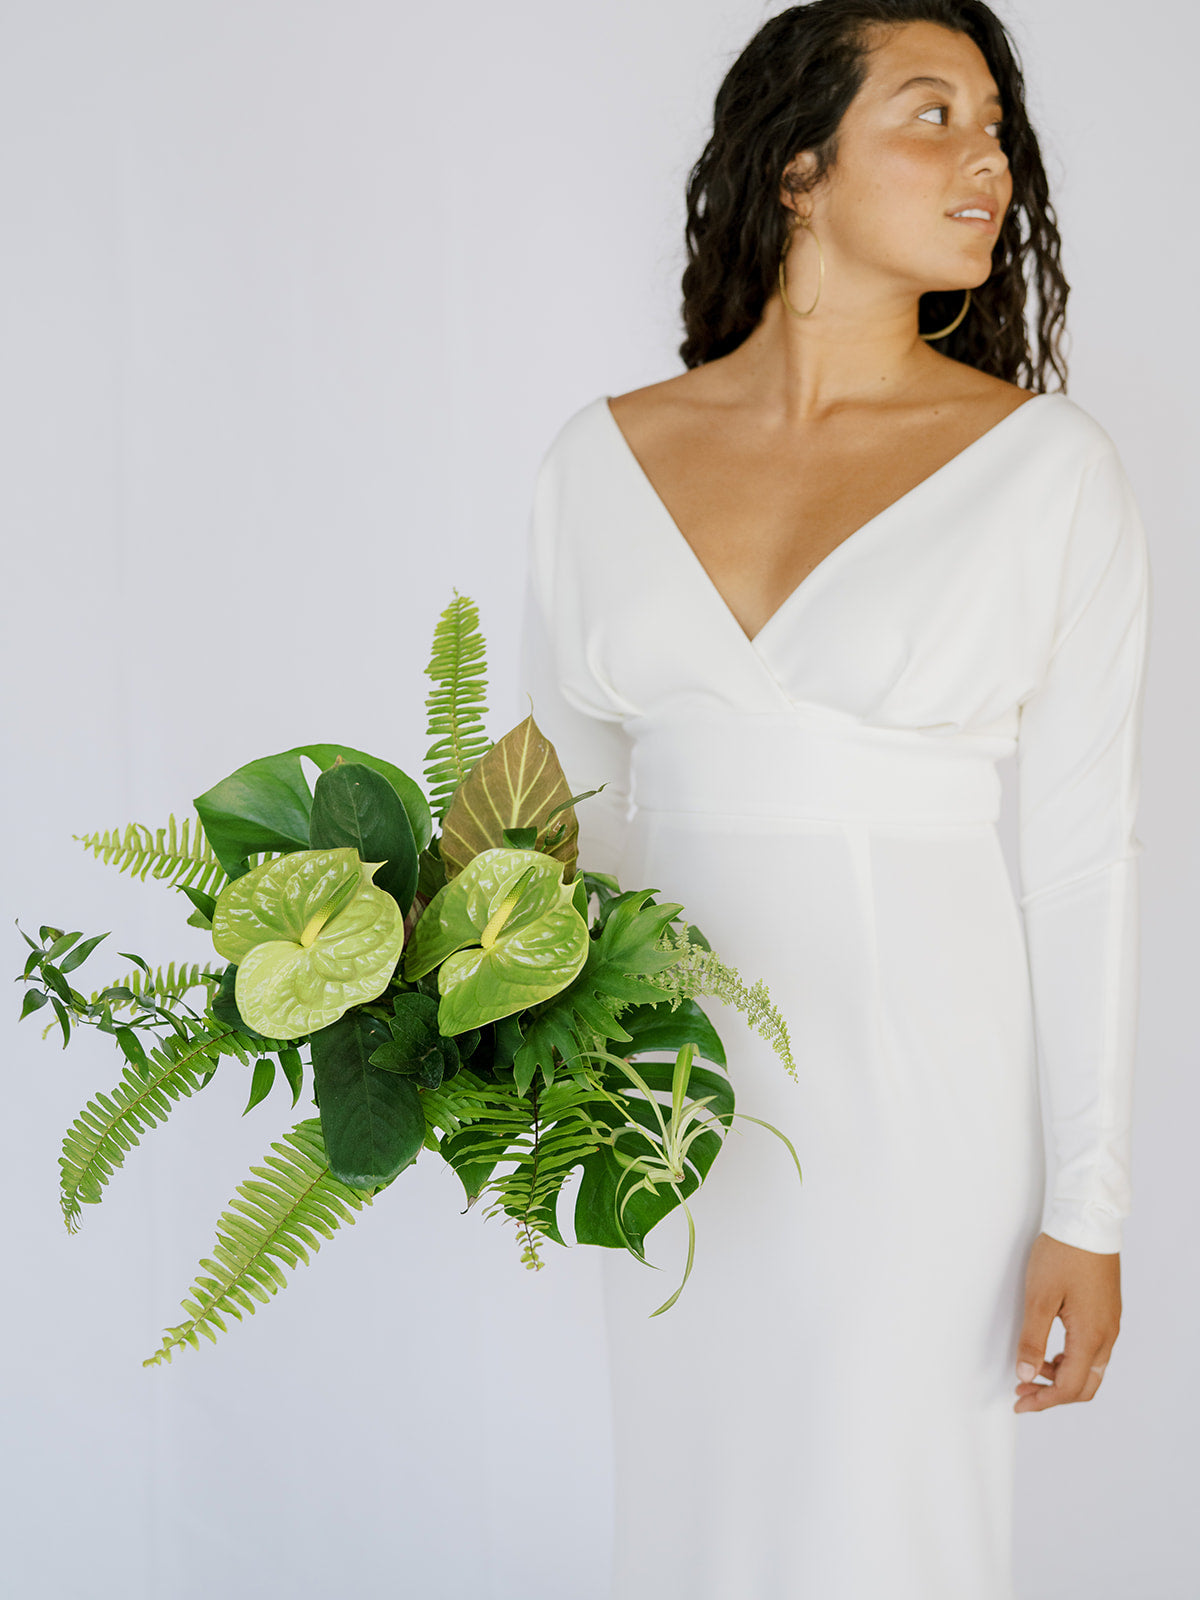 Green Monochrome A la Carte Wedding Flowers Bridal Bouquet from Green Fresh Florals + Plants